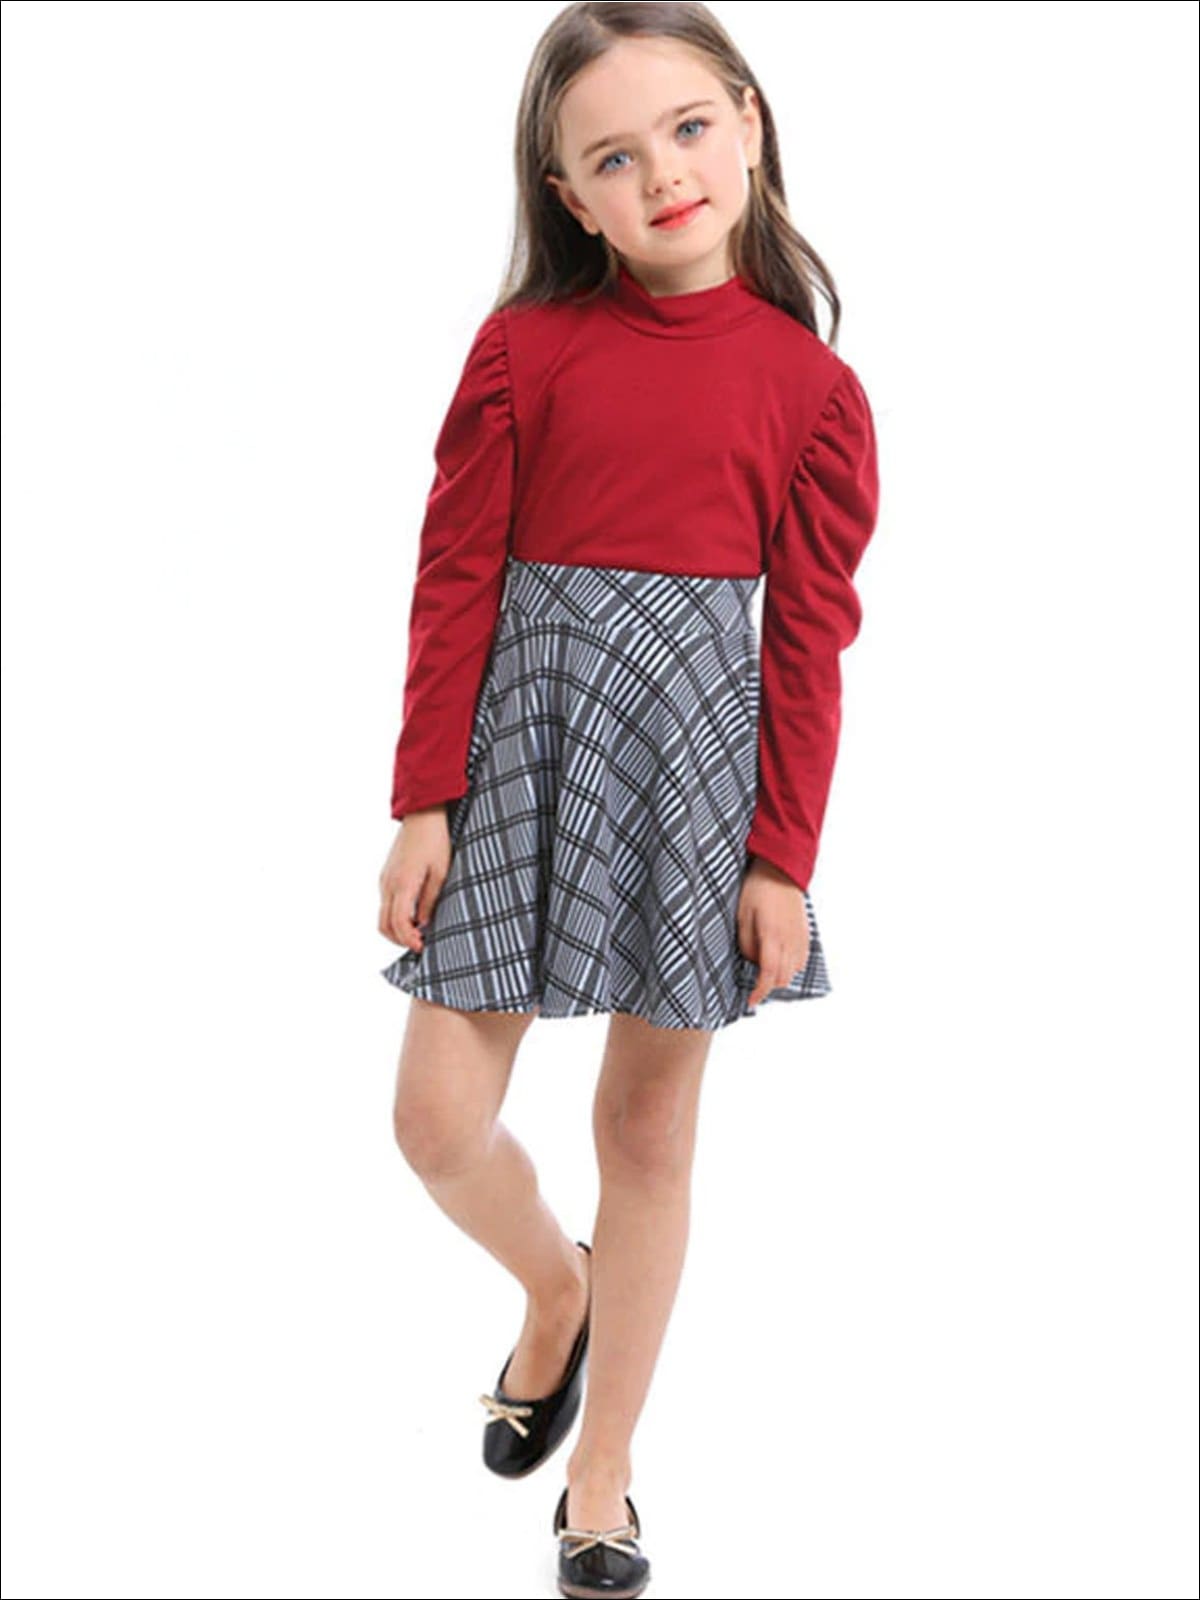 Girls Preppy Red Puff Sleeve Mock Neck Top & Grey Plaid Skirt Set - Red & Grey / 3T - Girls Fall Dressy Set